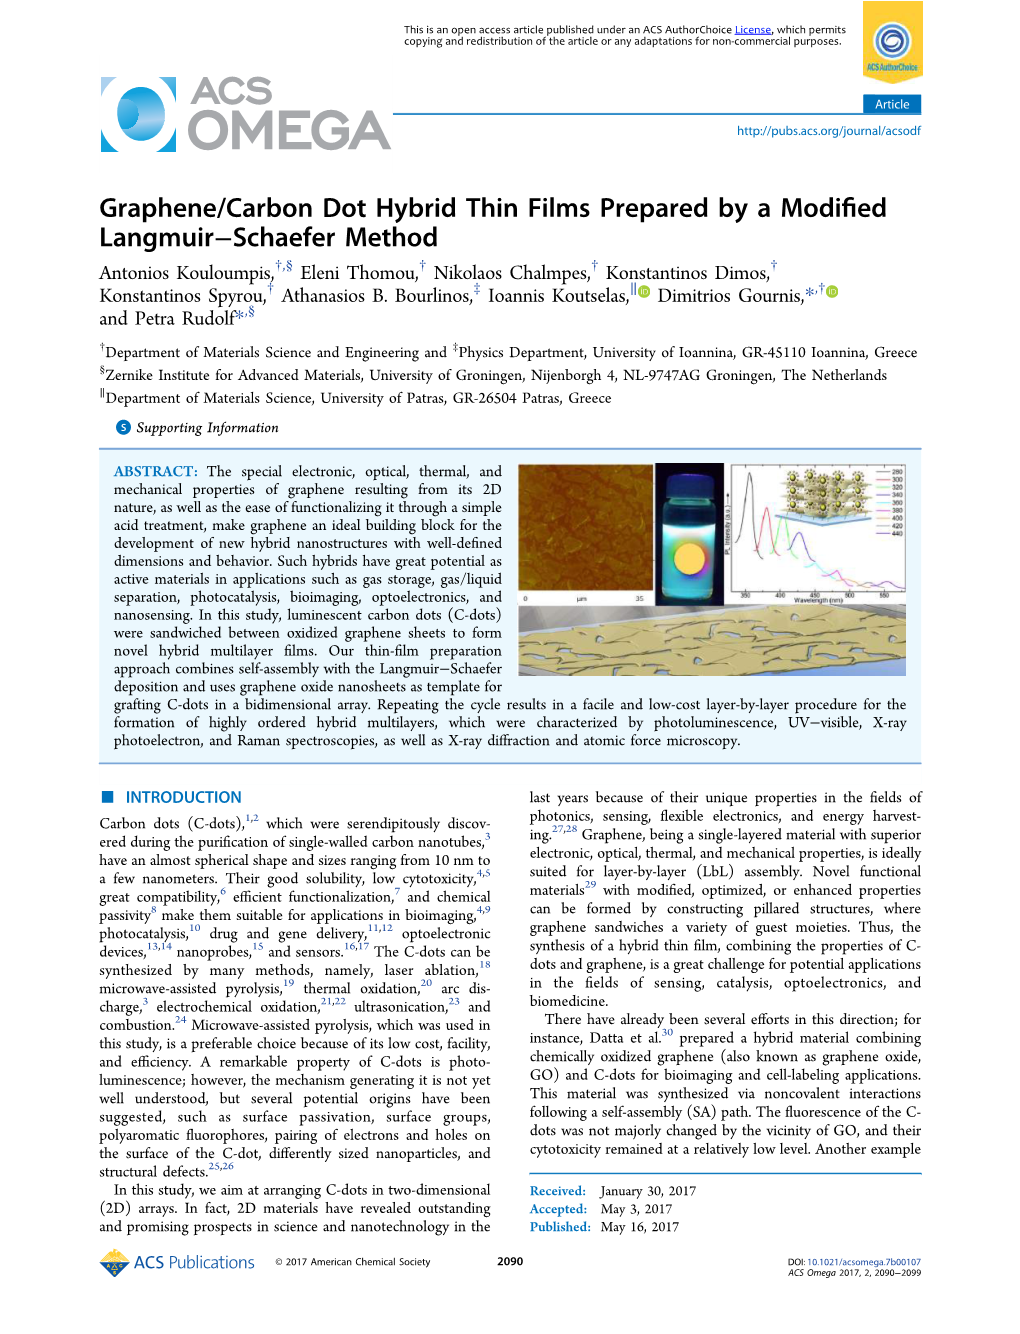 Graphene/Carbon Dot Hybrid Thin Films Prepared by a Modified